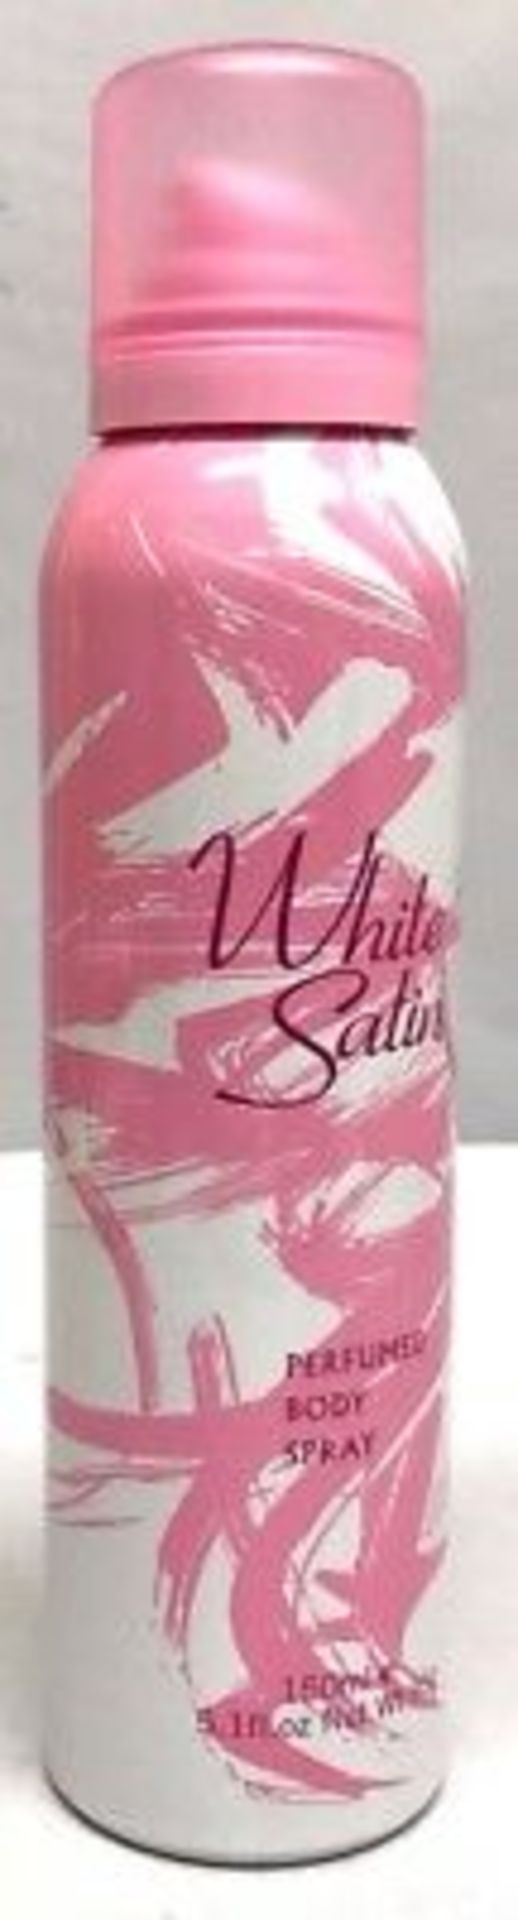 + VAT Brand New Taylor of London White Satin 150ml Body Spray